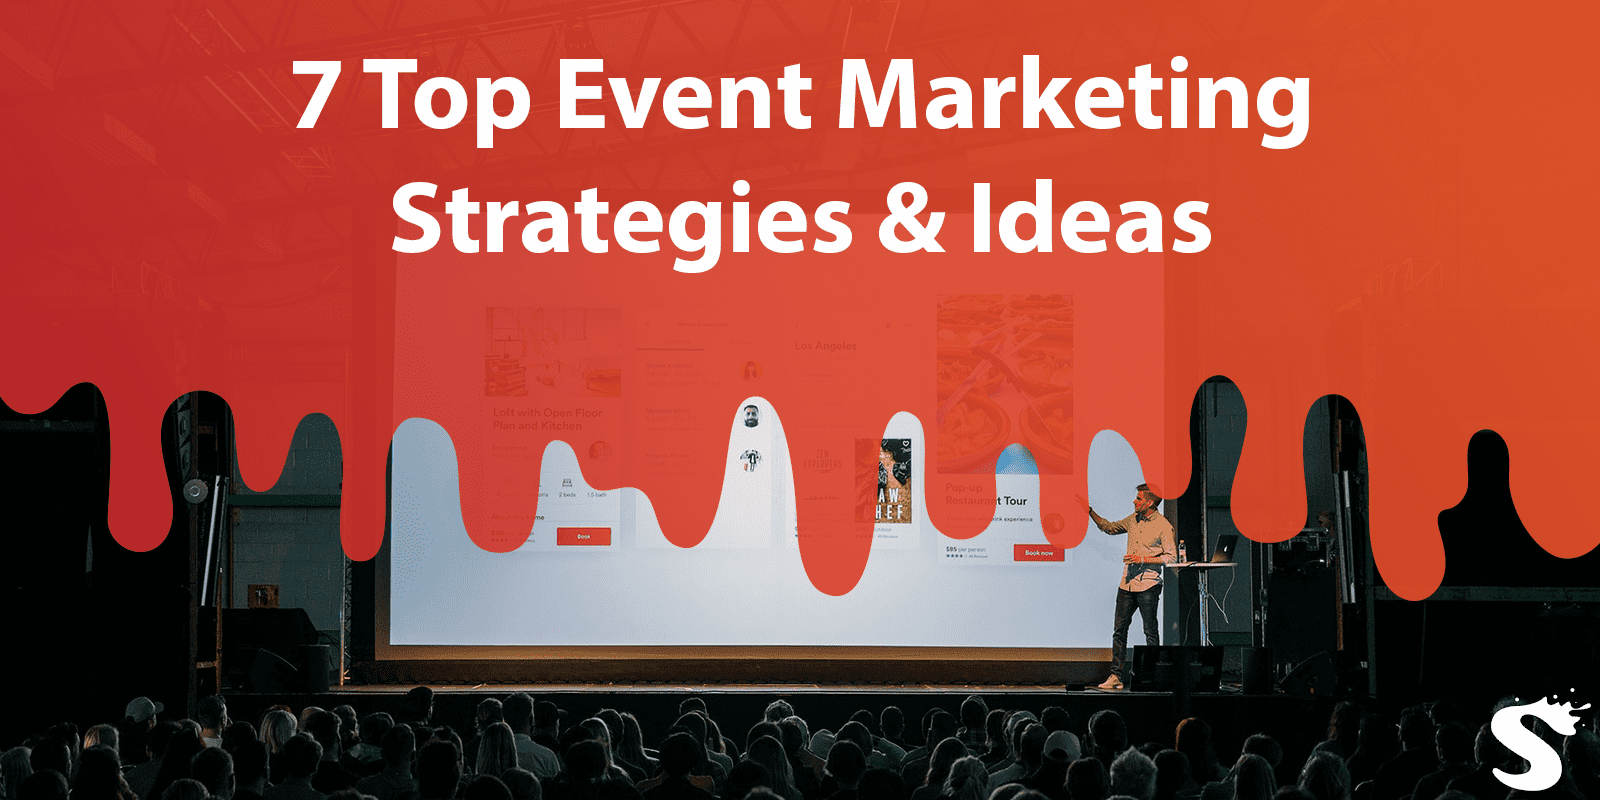 7 Top Event Marketing Strategies & Ideas